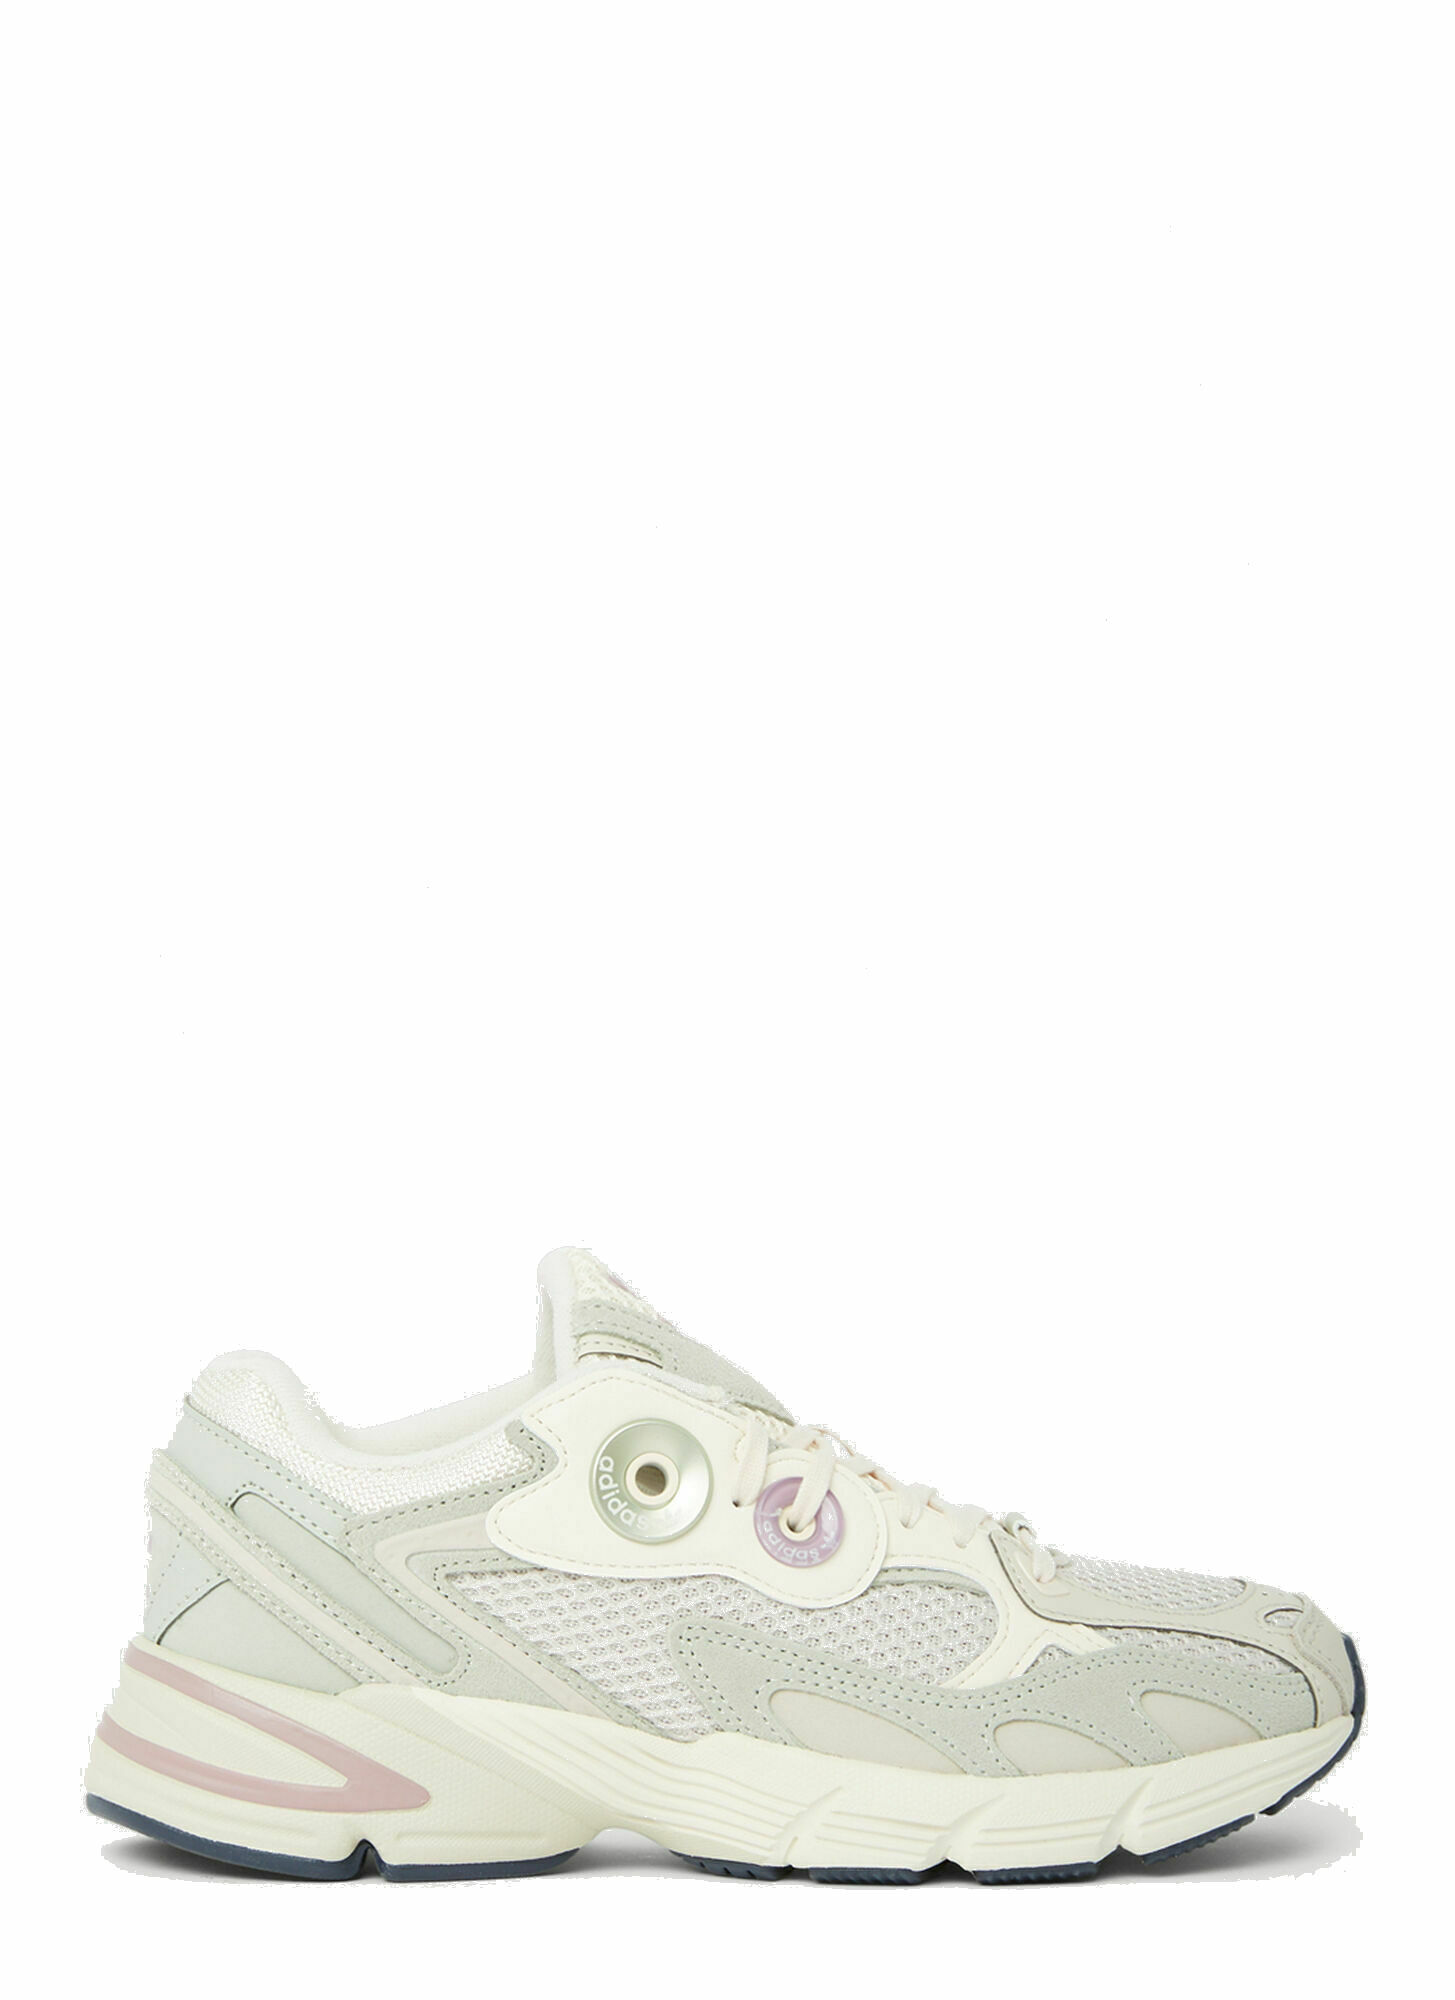 Astir Sneakers in Cream adidas